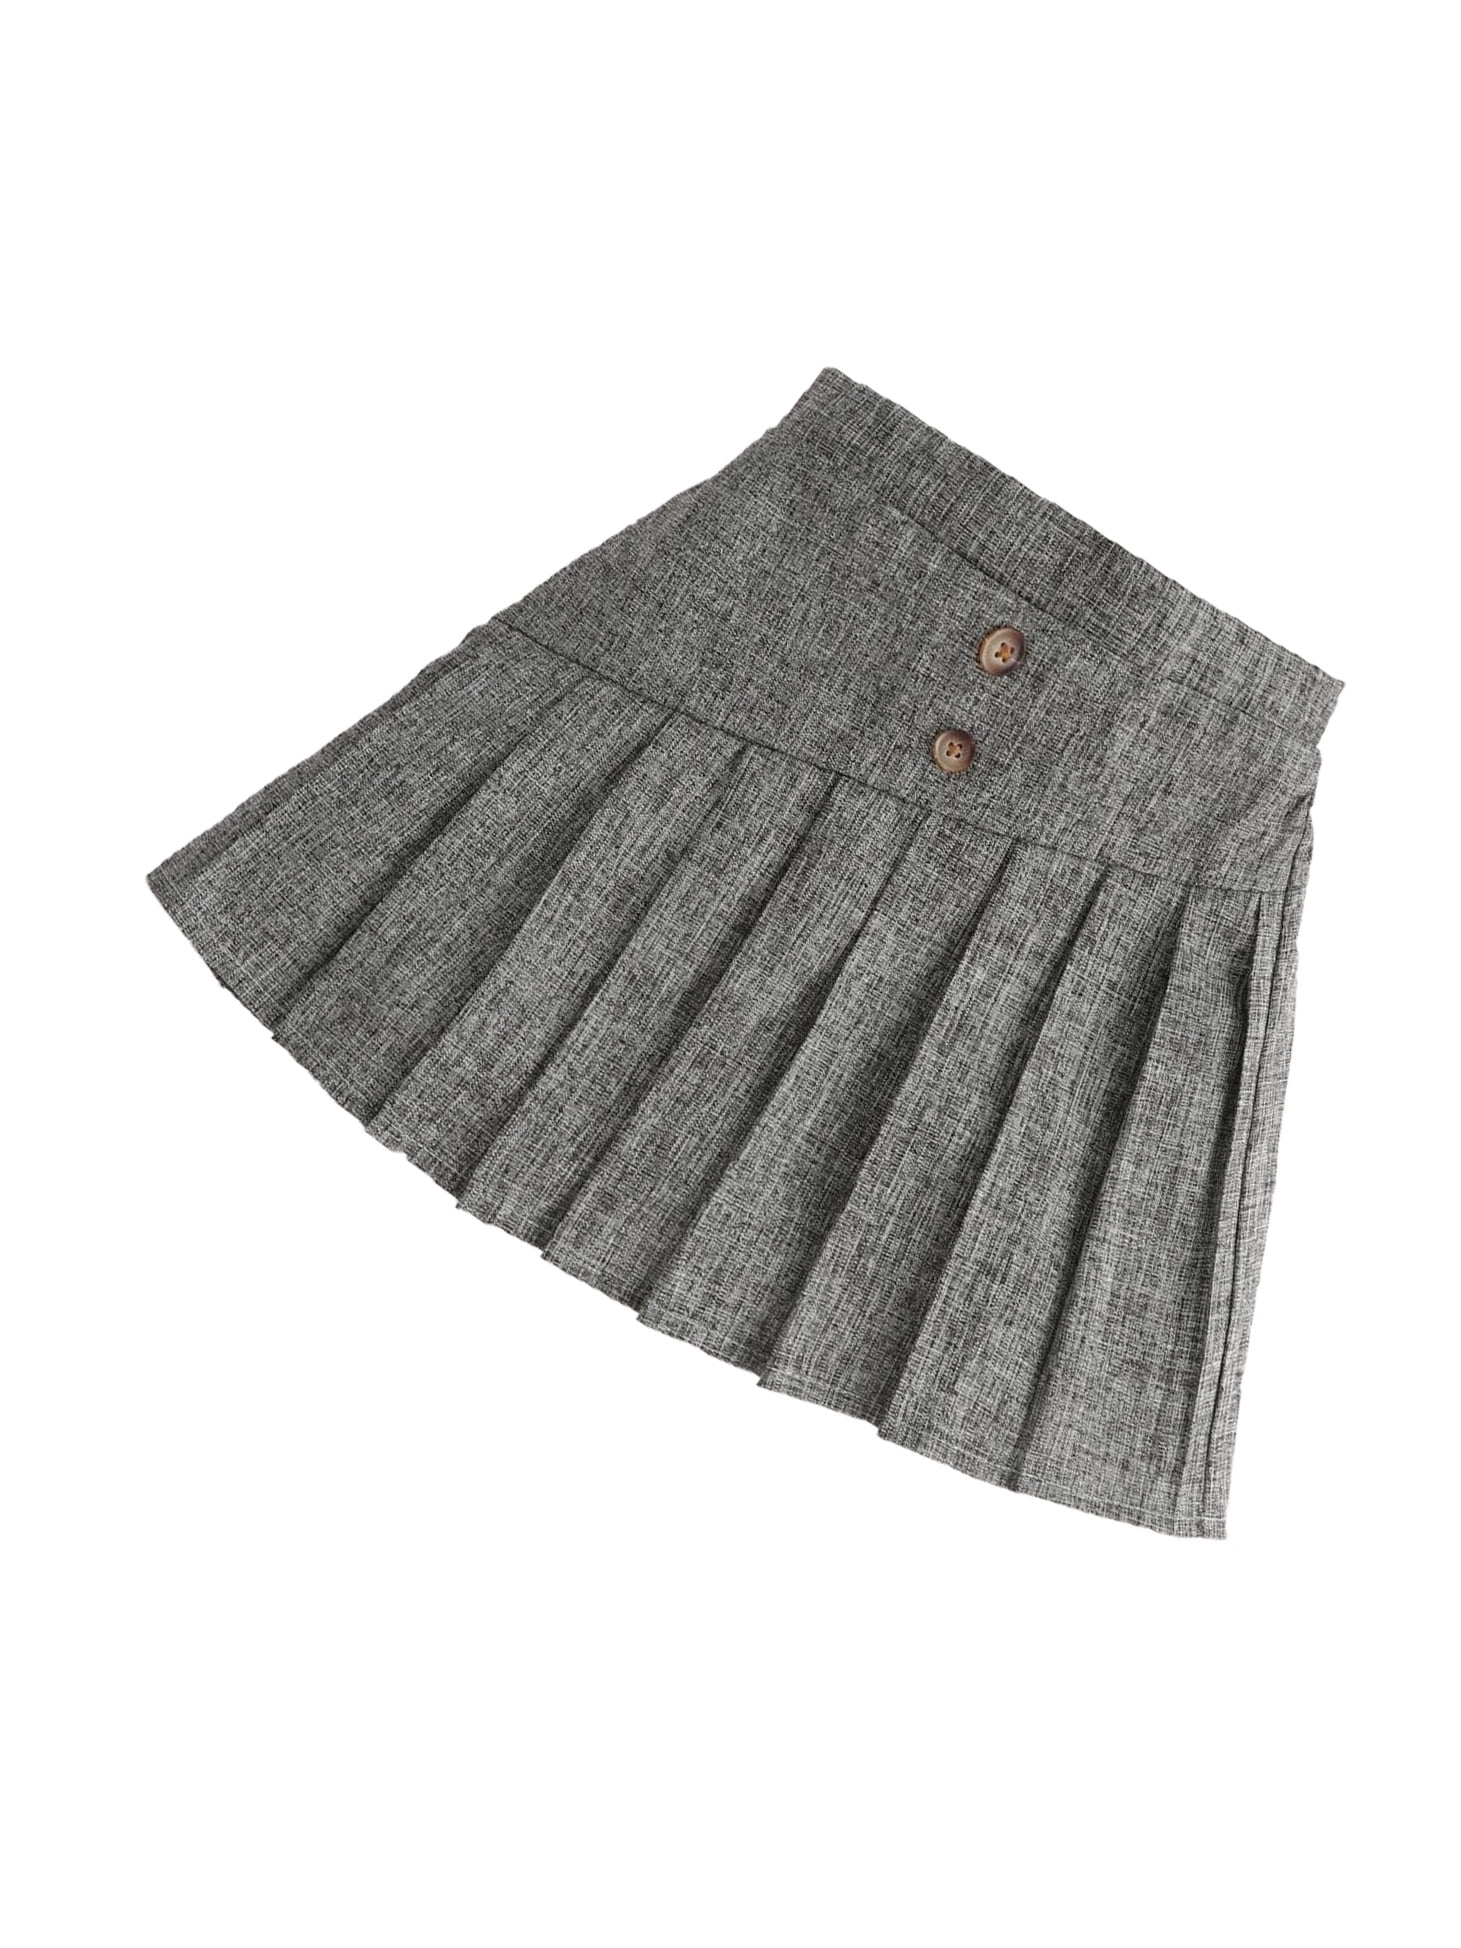 Buy Girls Grey Acid Wash Front Button Denim Mini Skirt Online at Sassafras